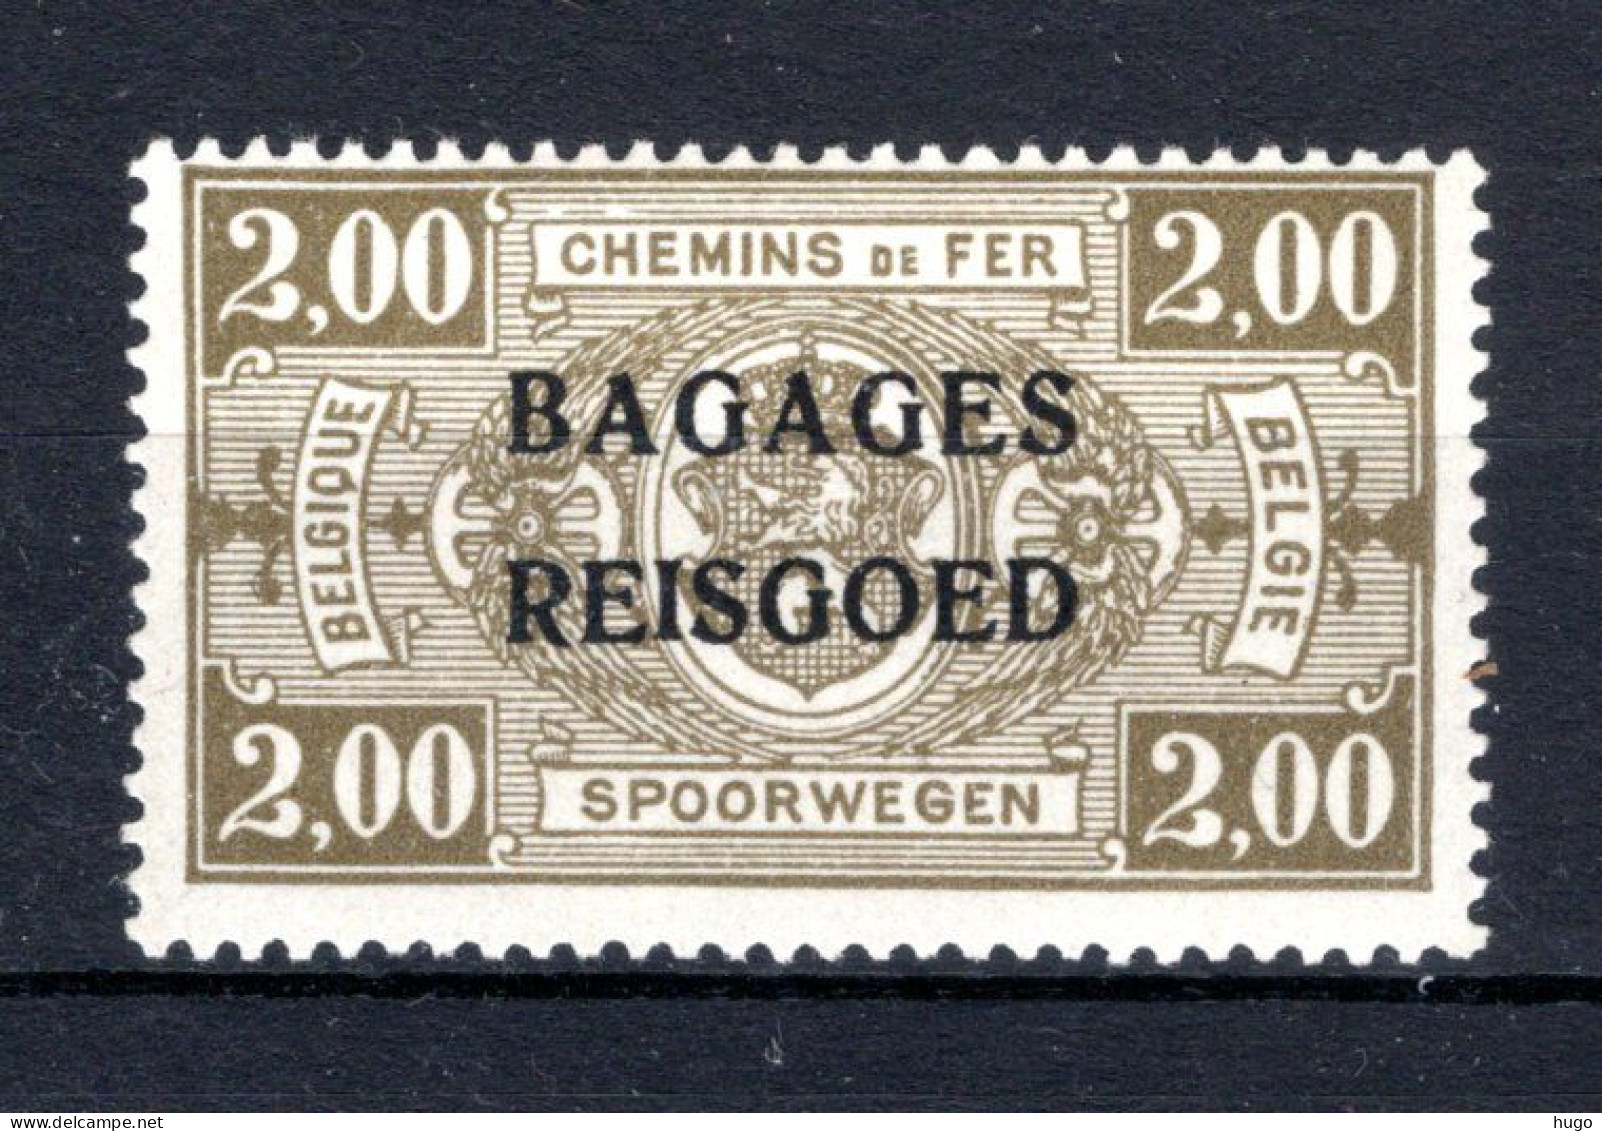 BA11 MNH** 1935 - Spoorwegzegels Met Opdruk "BAGAGES - REISGOED" - Sot  - Luggage [BA]